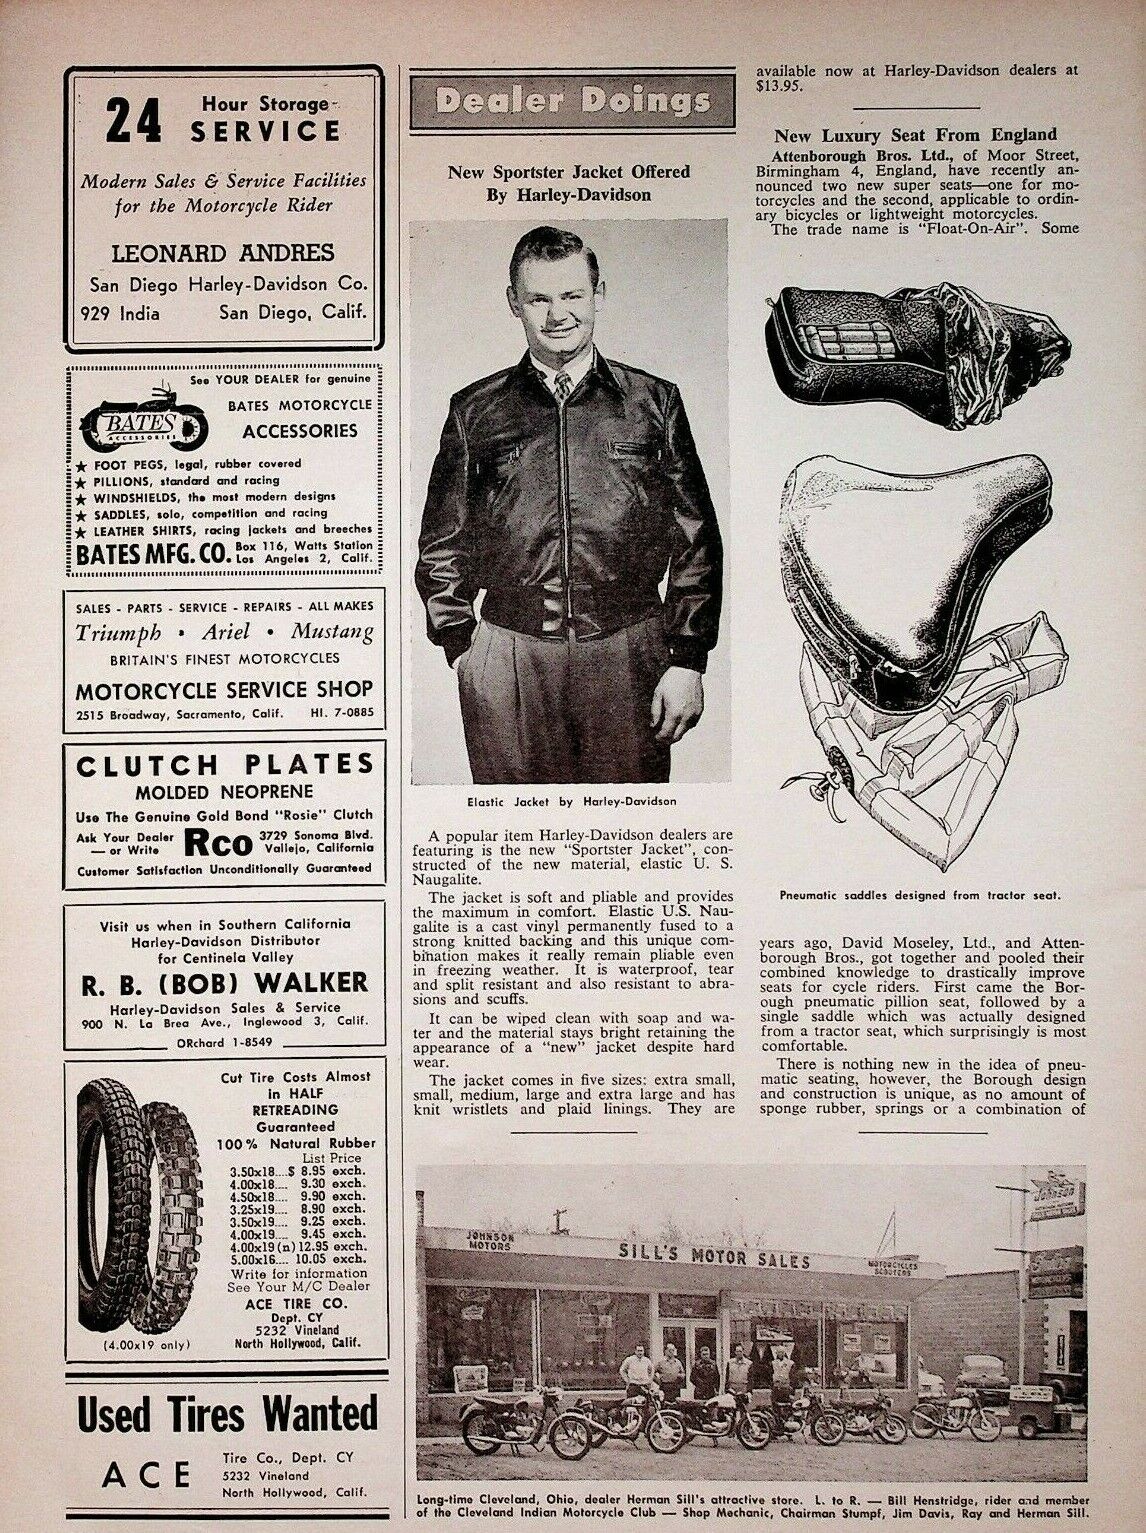 1954 Harley-Davidson Offers New Sportster Jacket - 1-Page Vintage Article